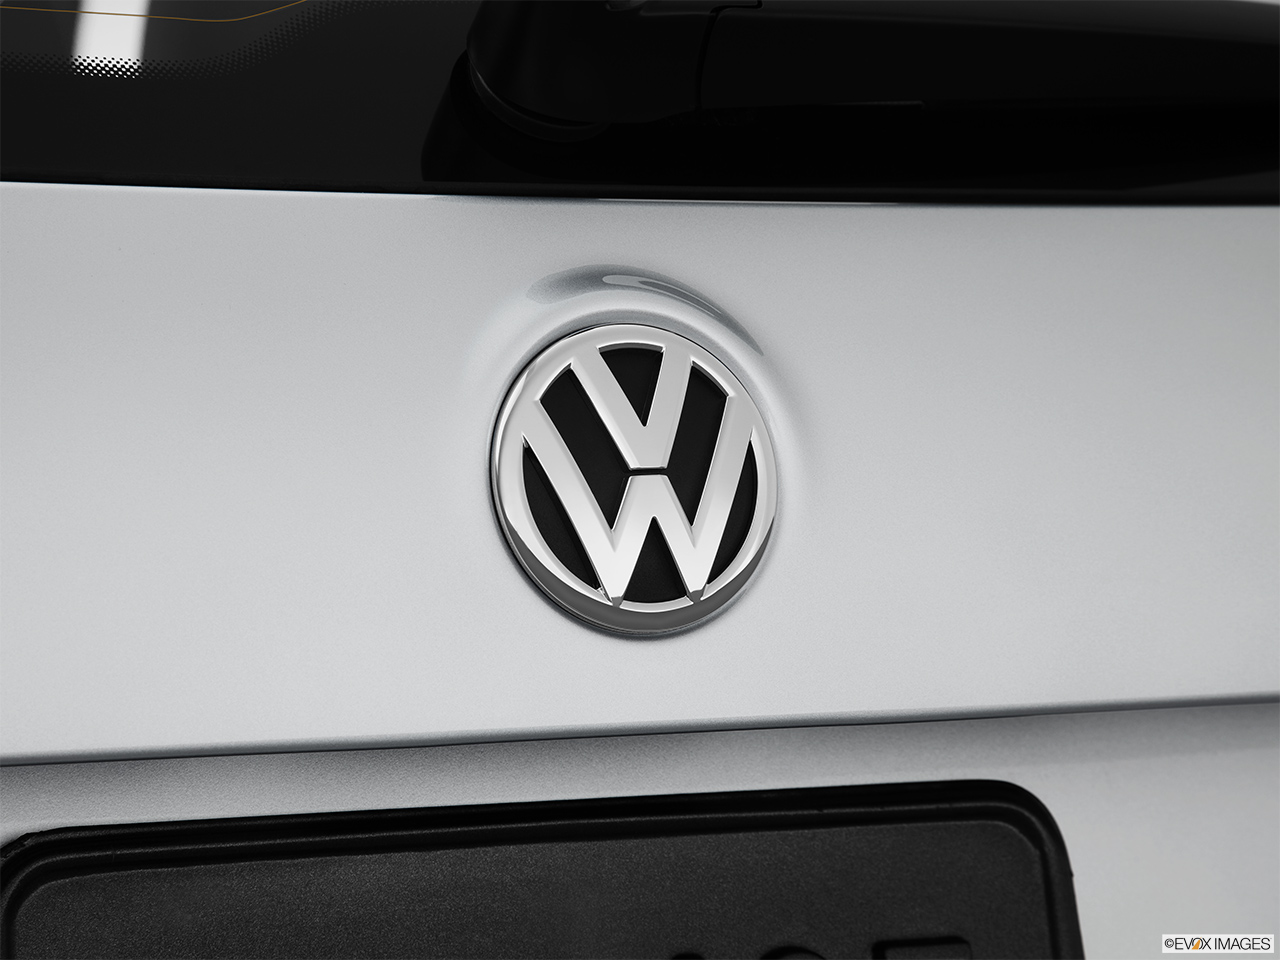 2013 Volkswagen Jetta SportWagen TDI Rear manufacture badge/emblem 